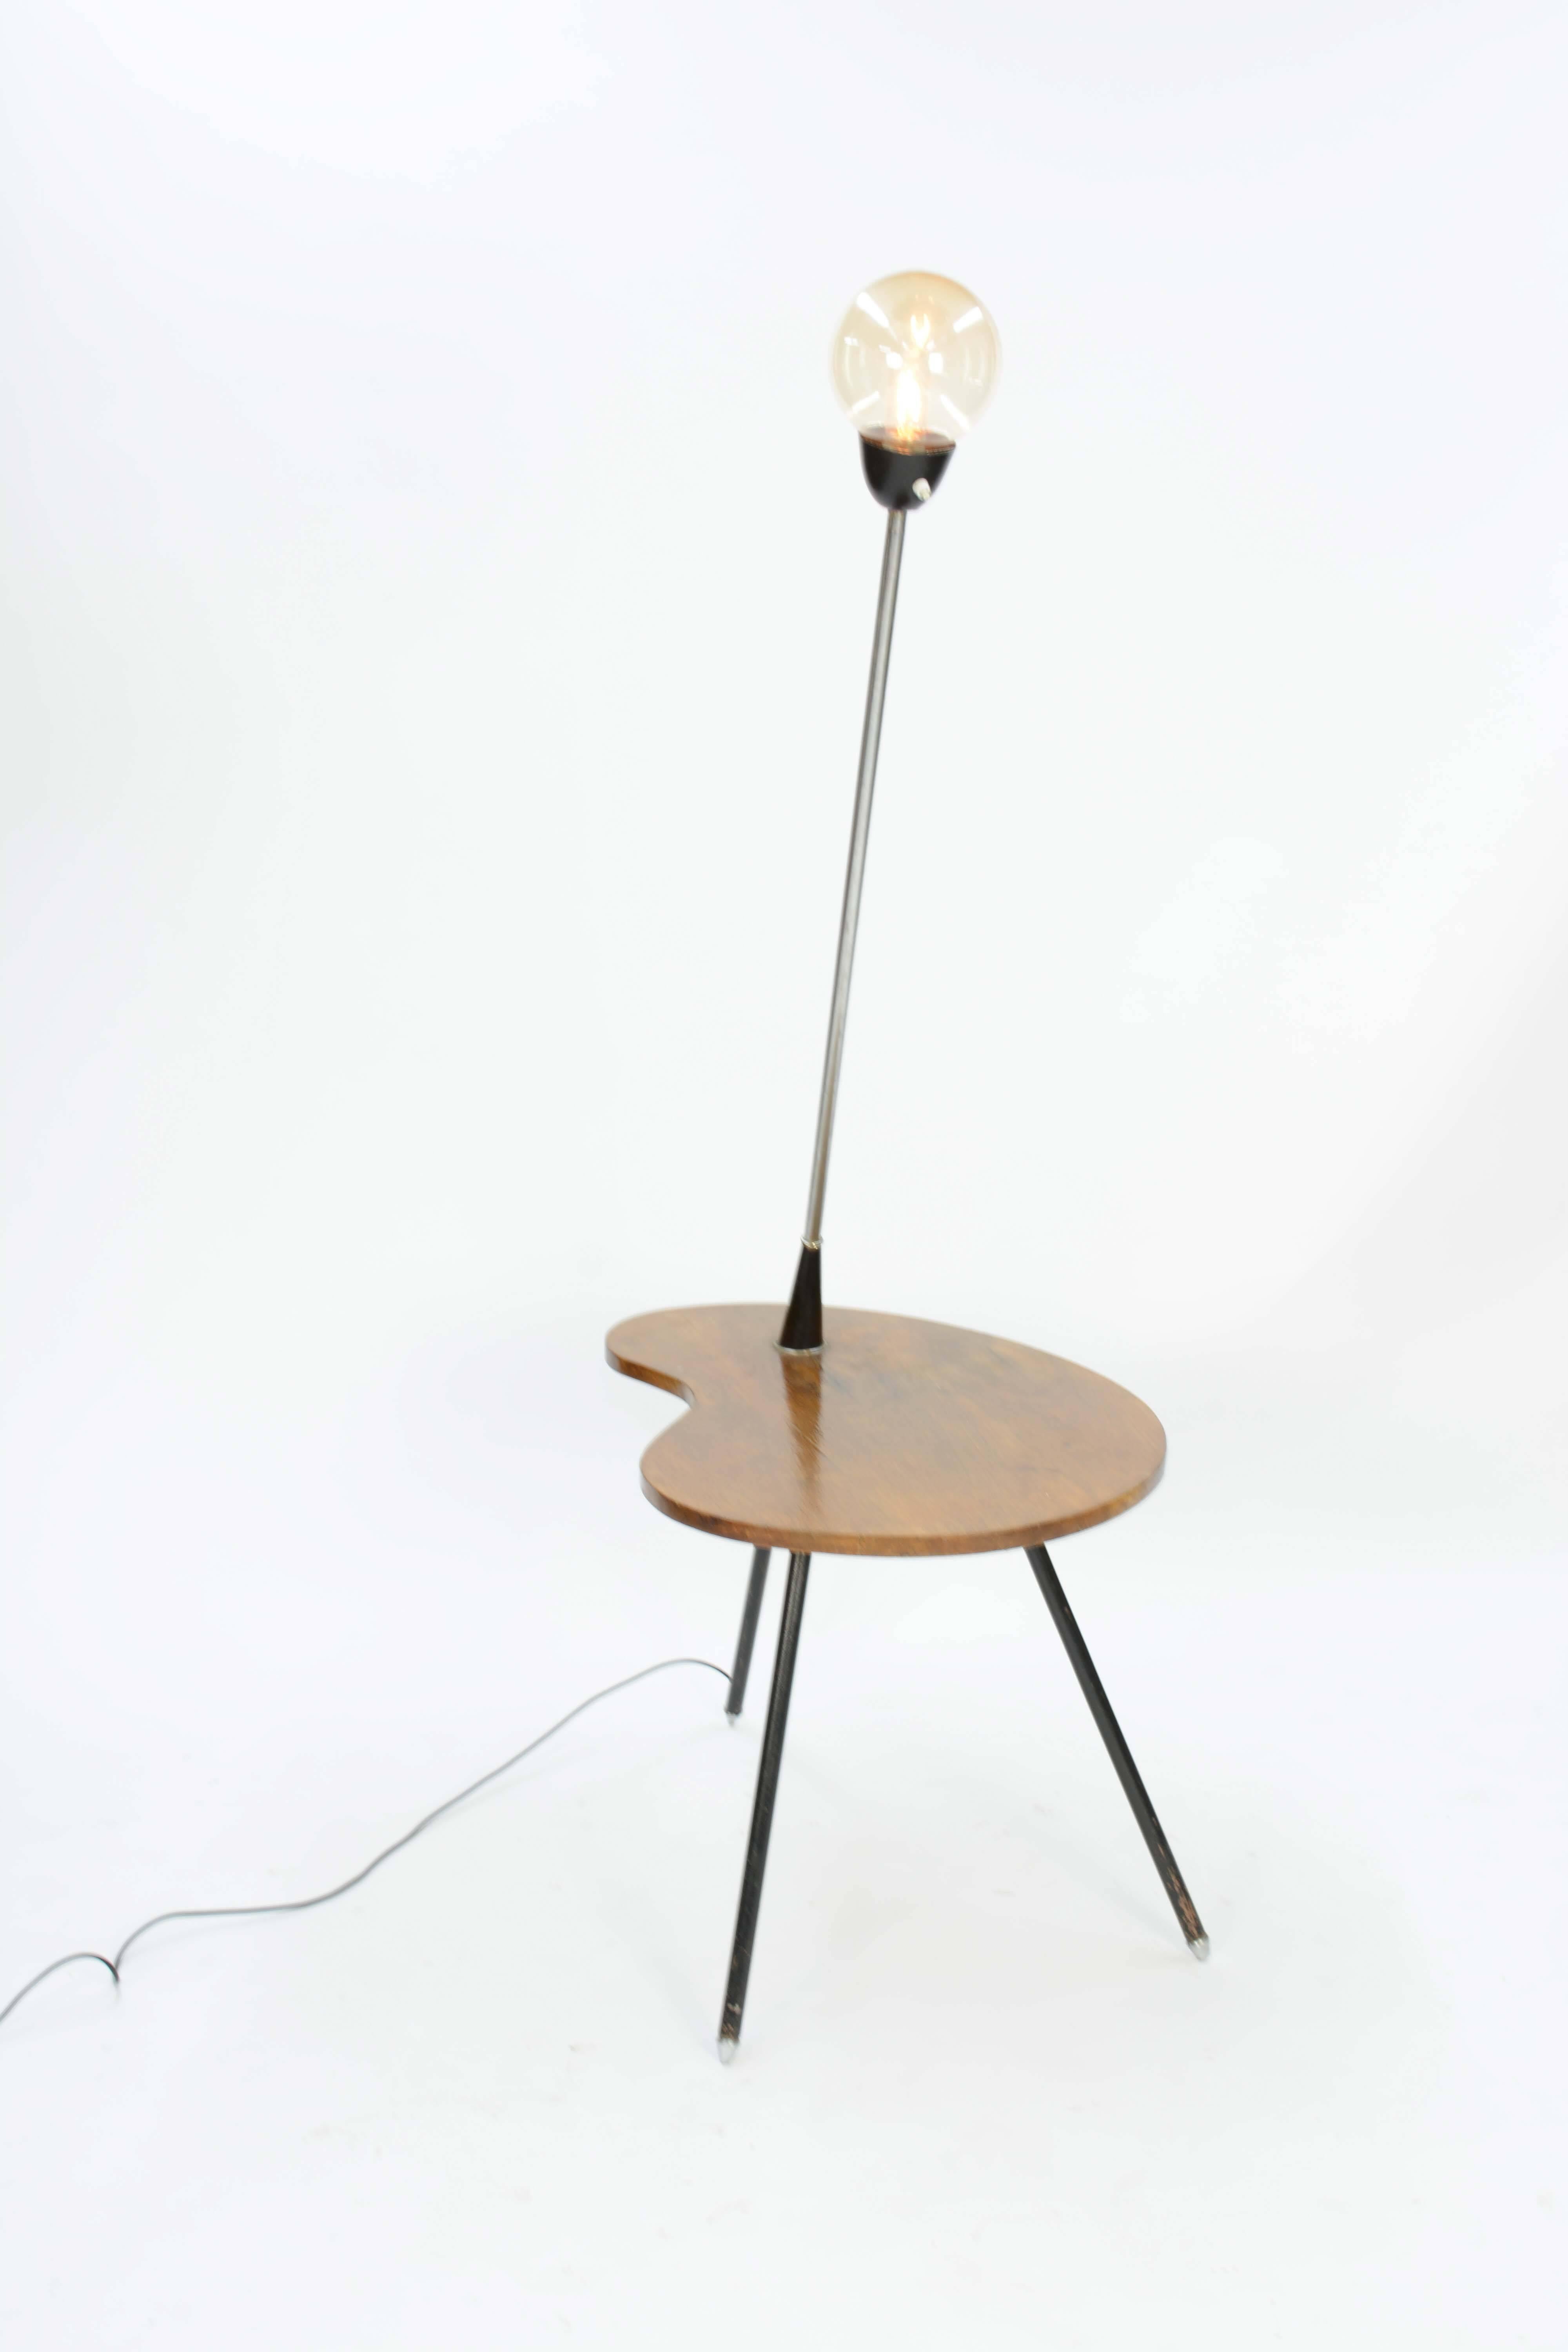 Danish Extraordinary Cocktail Table Floor Lamp with Walnut Biomorphic, Tabletop